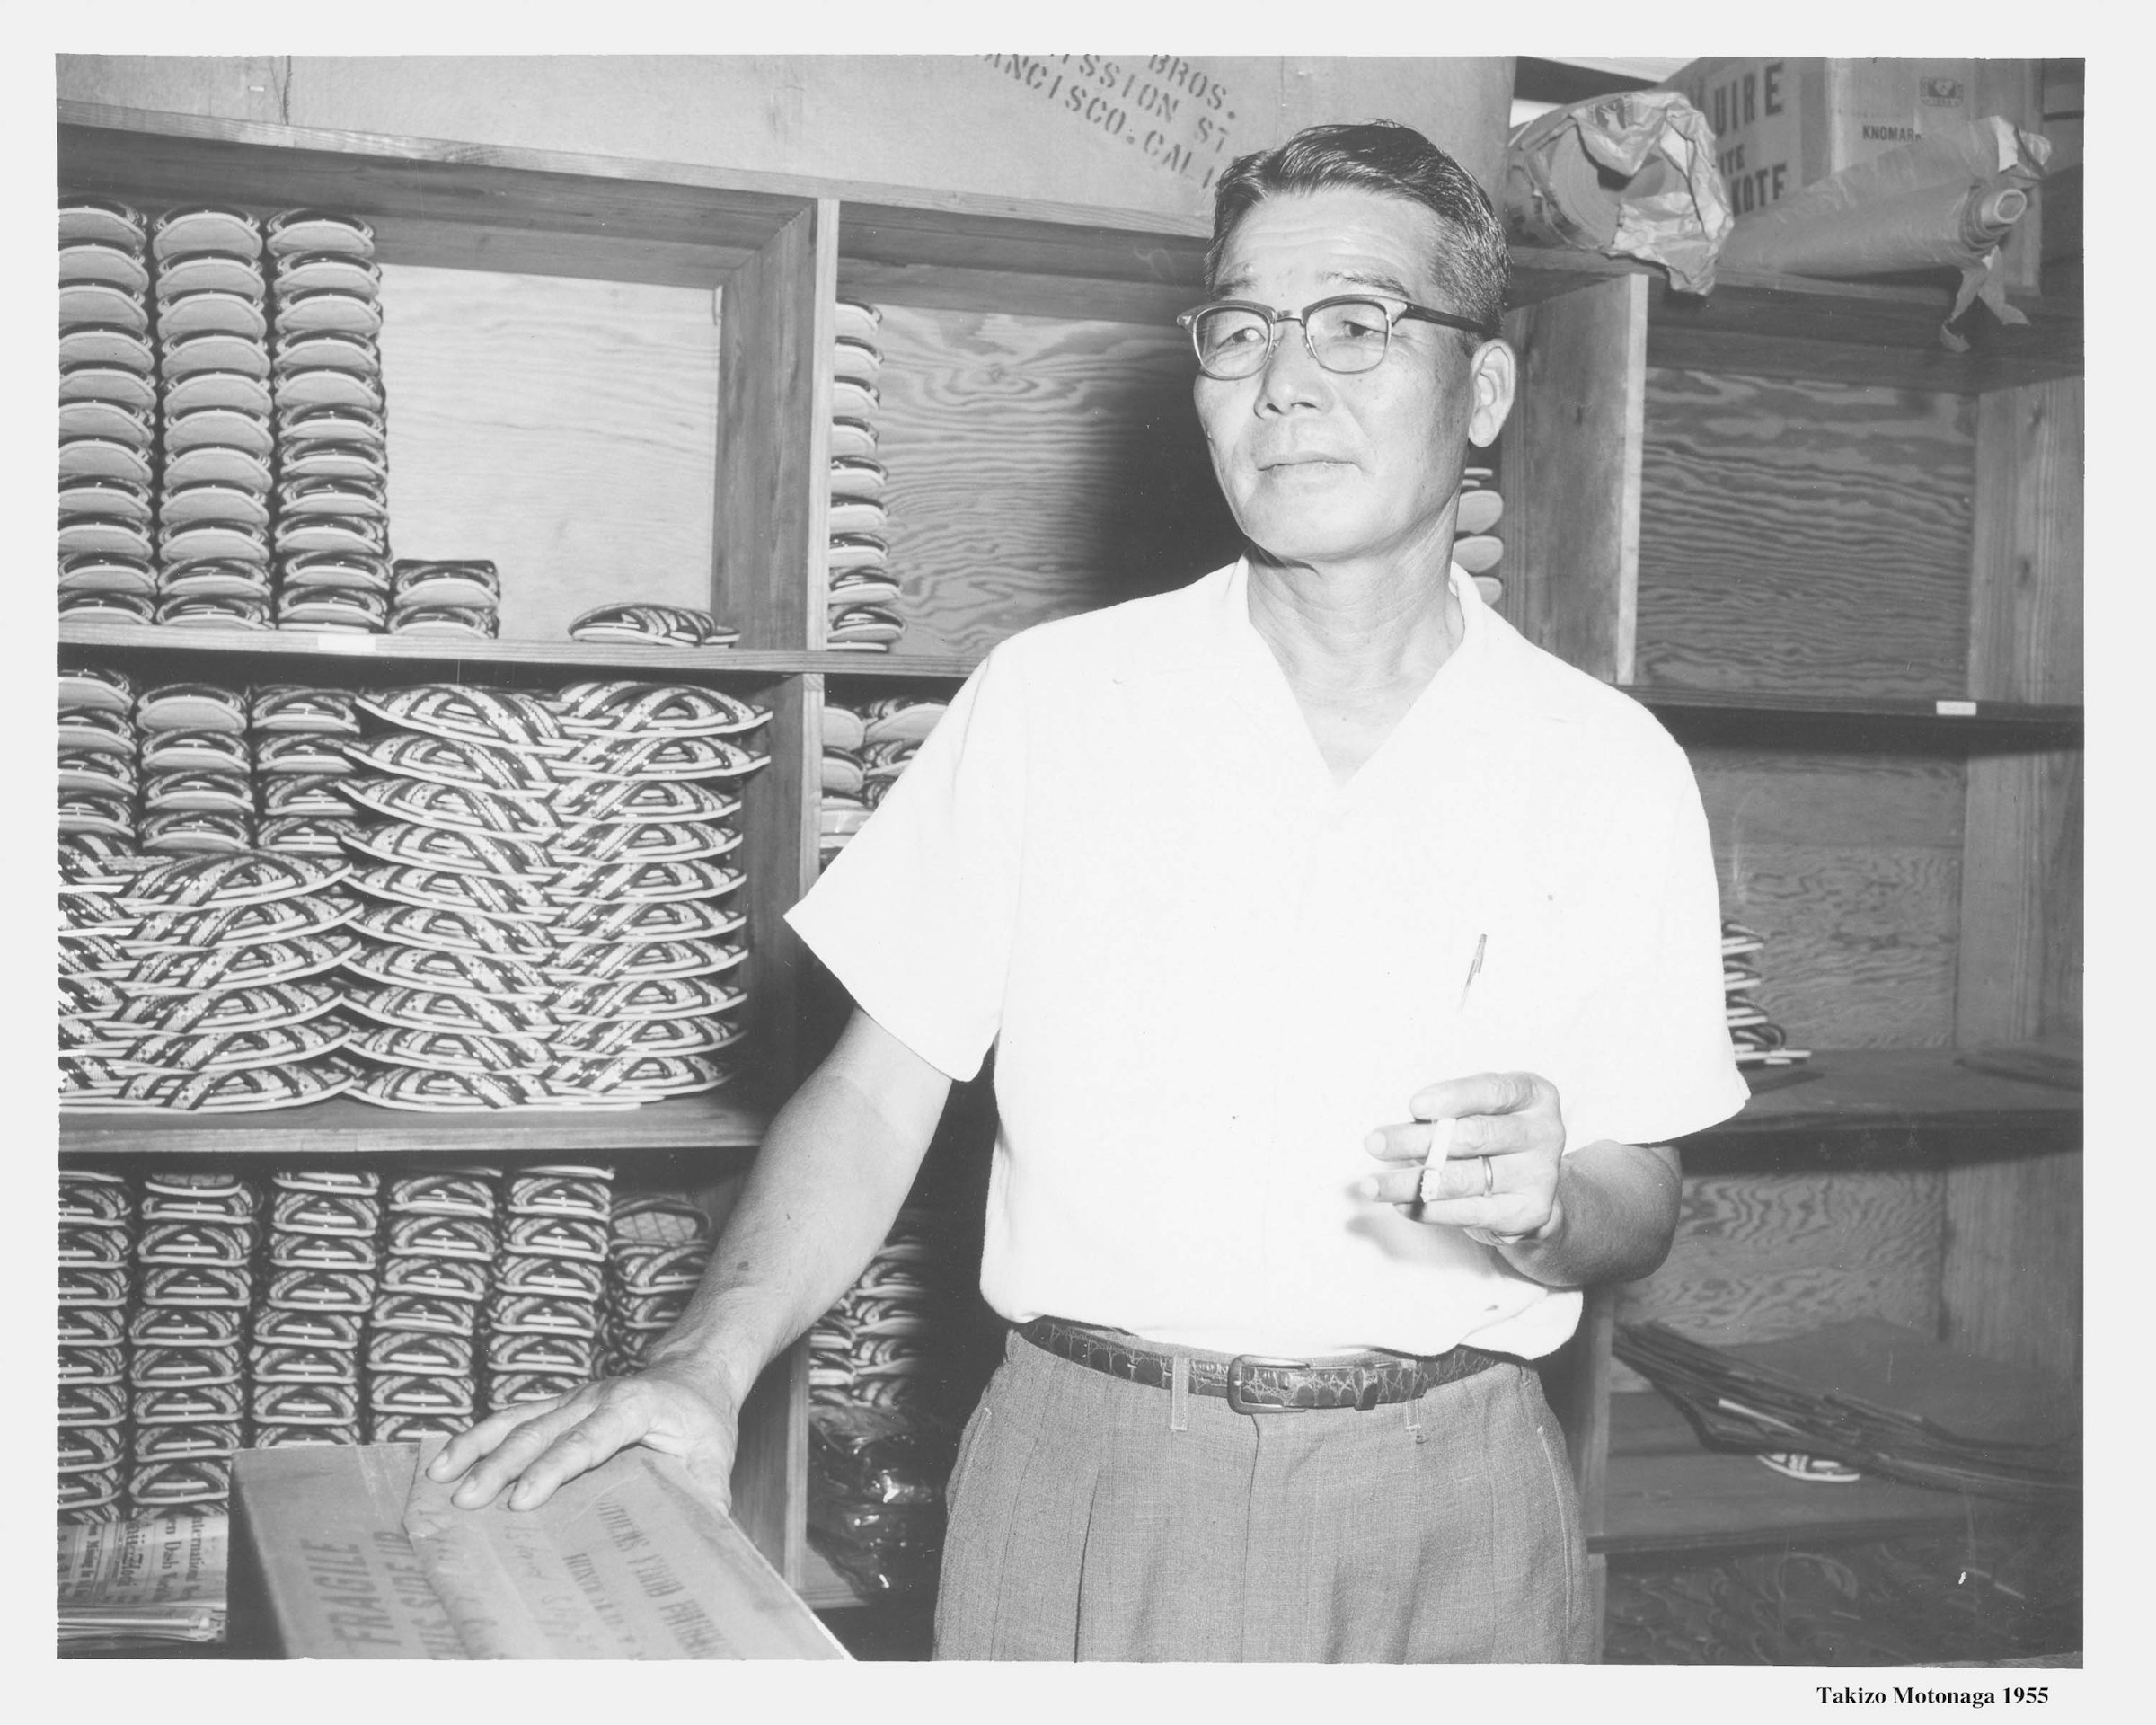 Founder Takizou Motonaga (from a 1955 photograph)